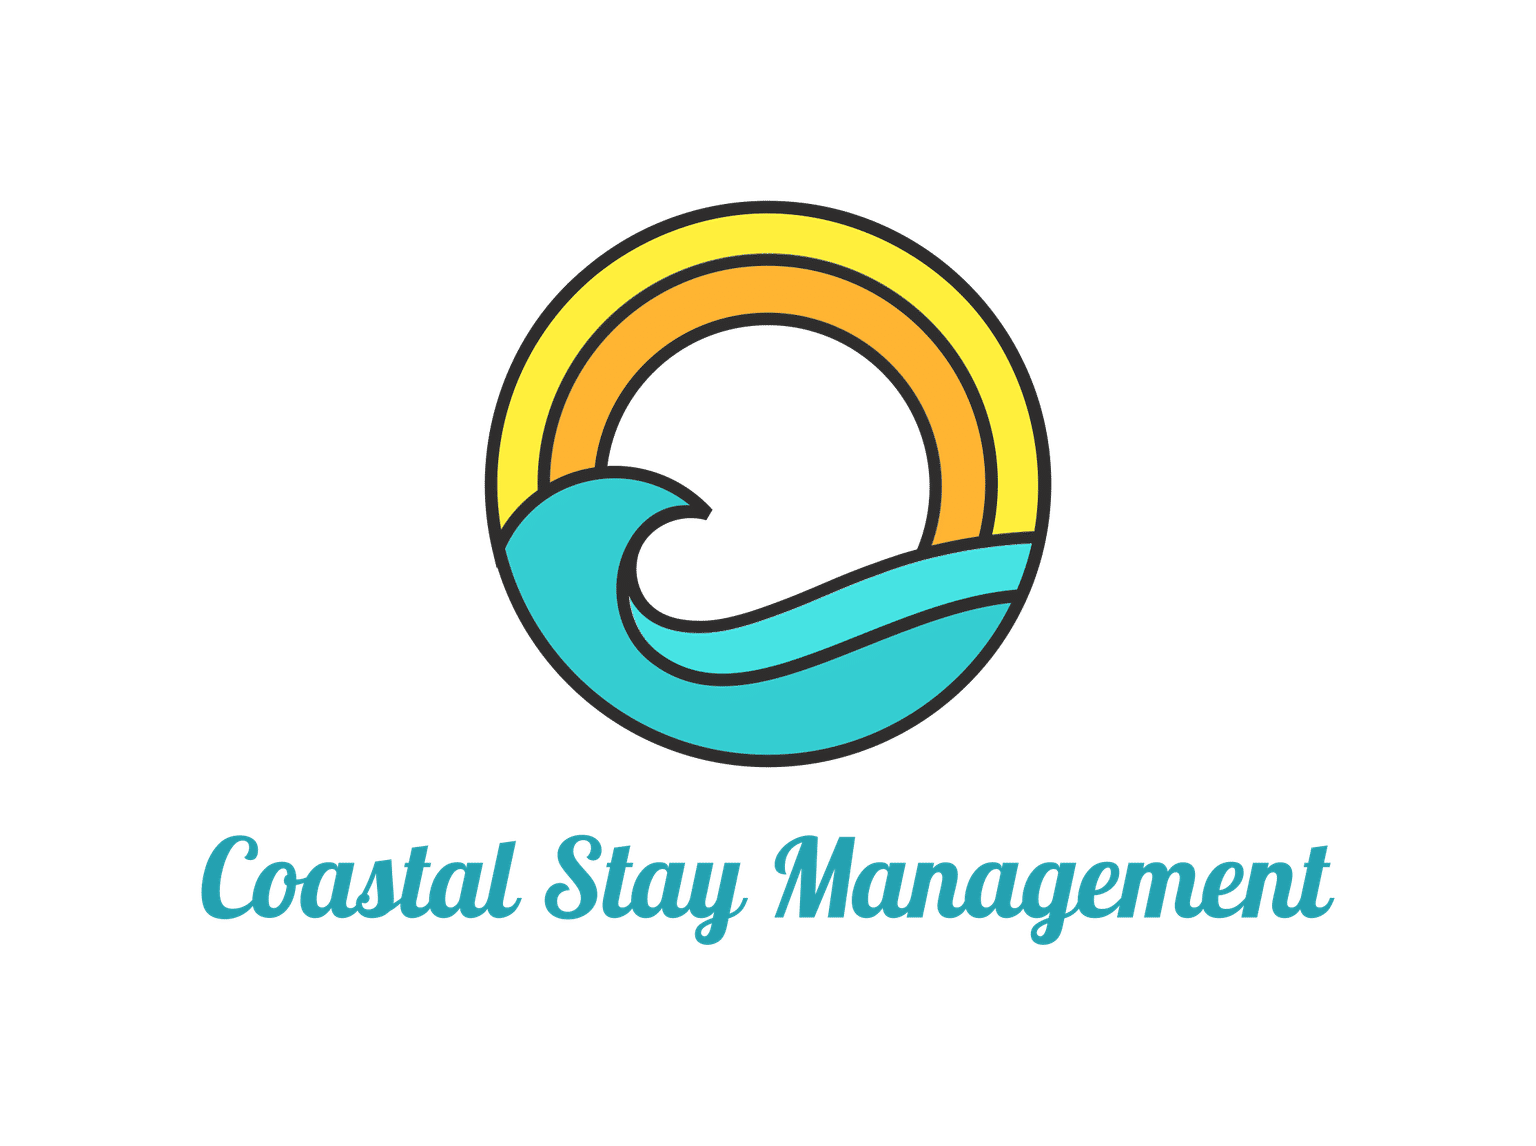 Coastal Stay Property Management 